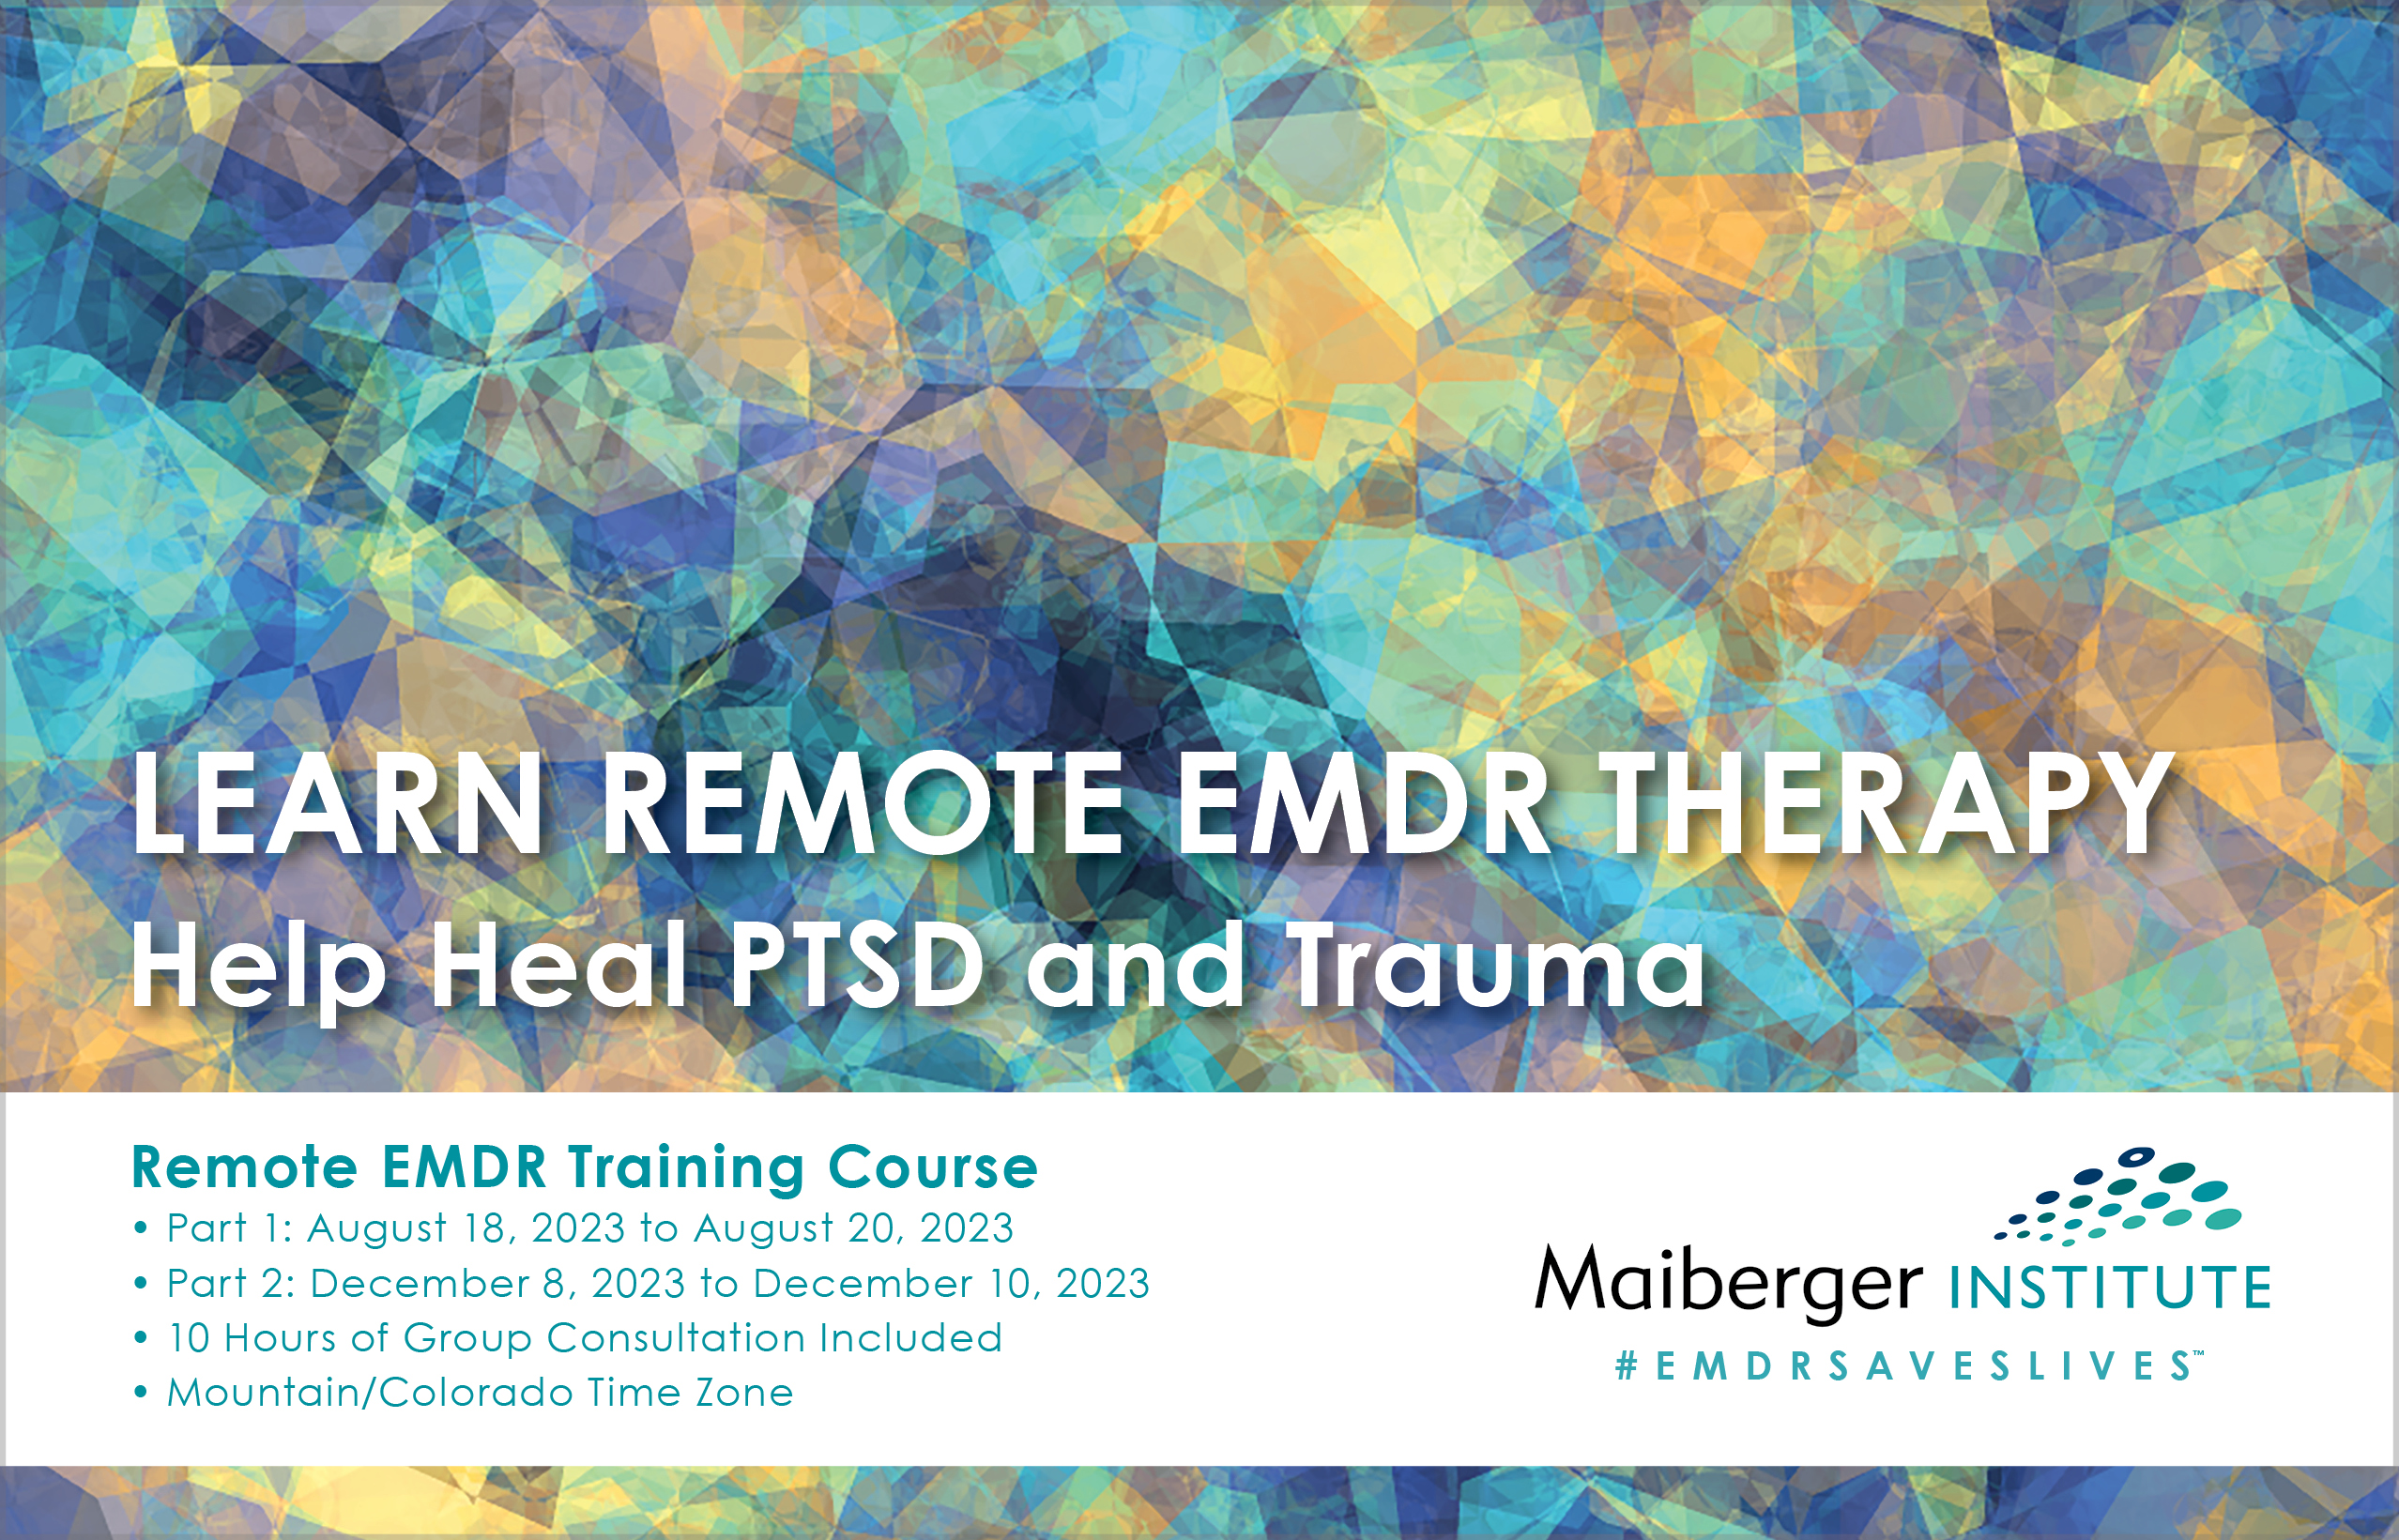 Complete Remote EMDR Training Course - August 2023 December 2023 - Maiberger Institute - EMDR Training Schedule